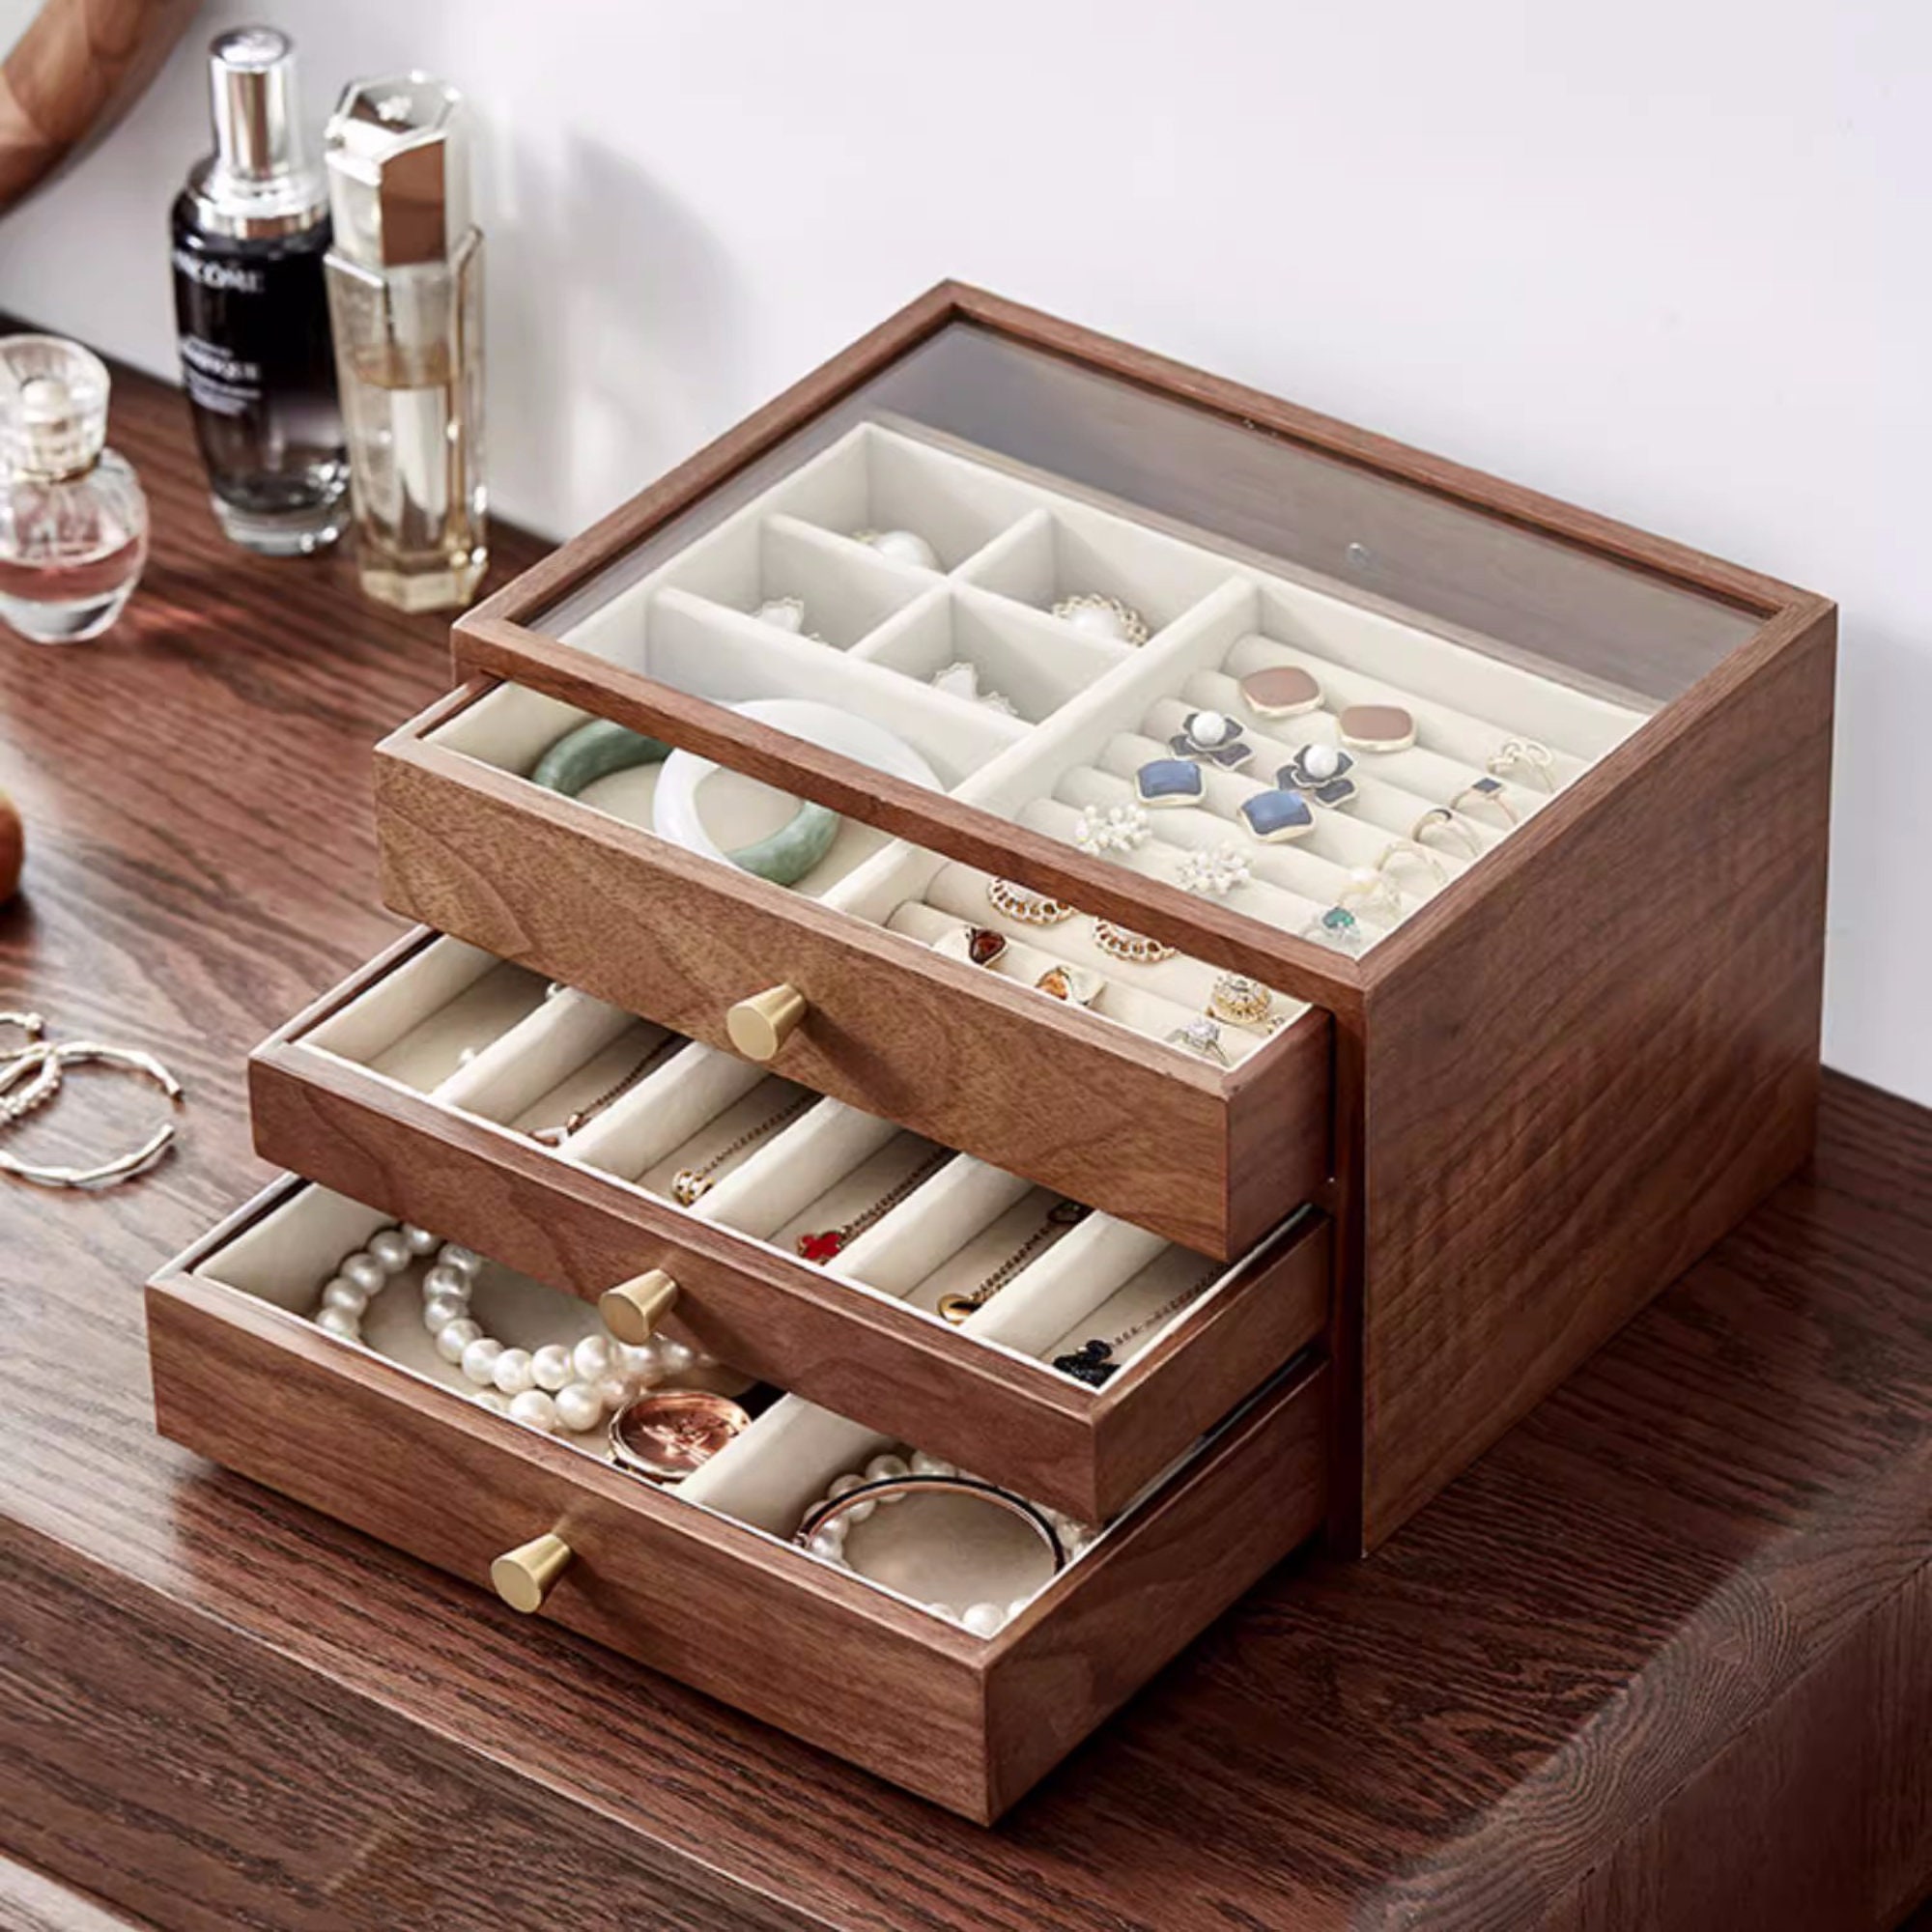 Jiallo Wood Jewelry Box with 4-Drawer and Anti Tarnish Felt in Brown